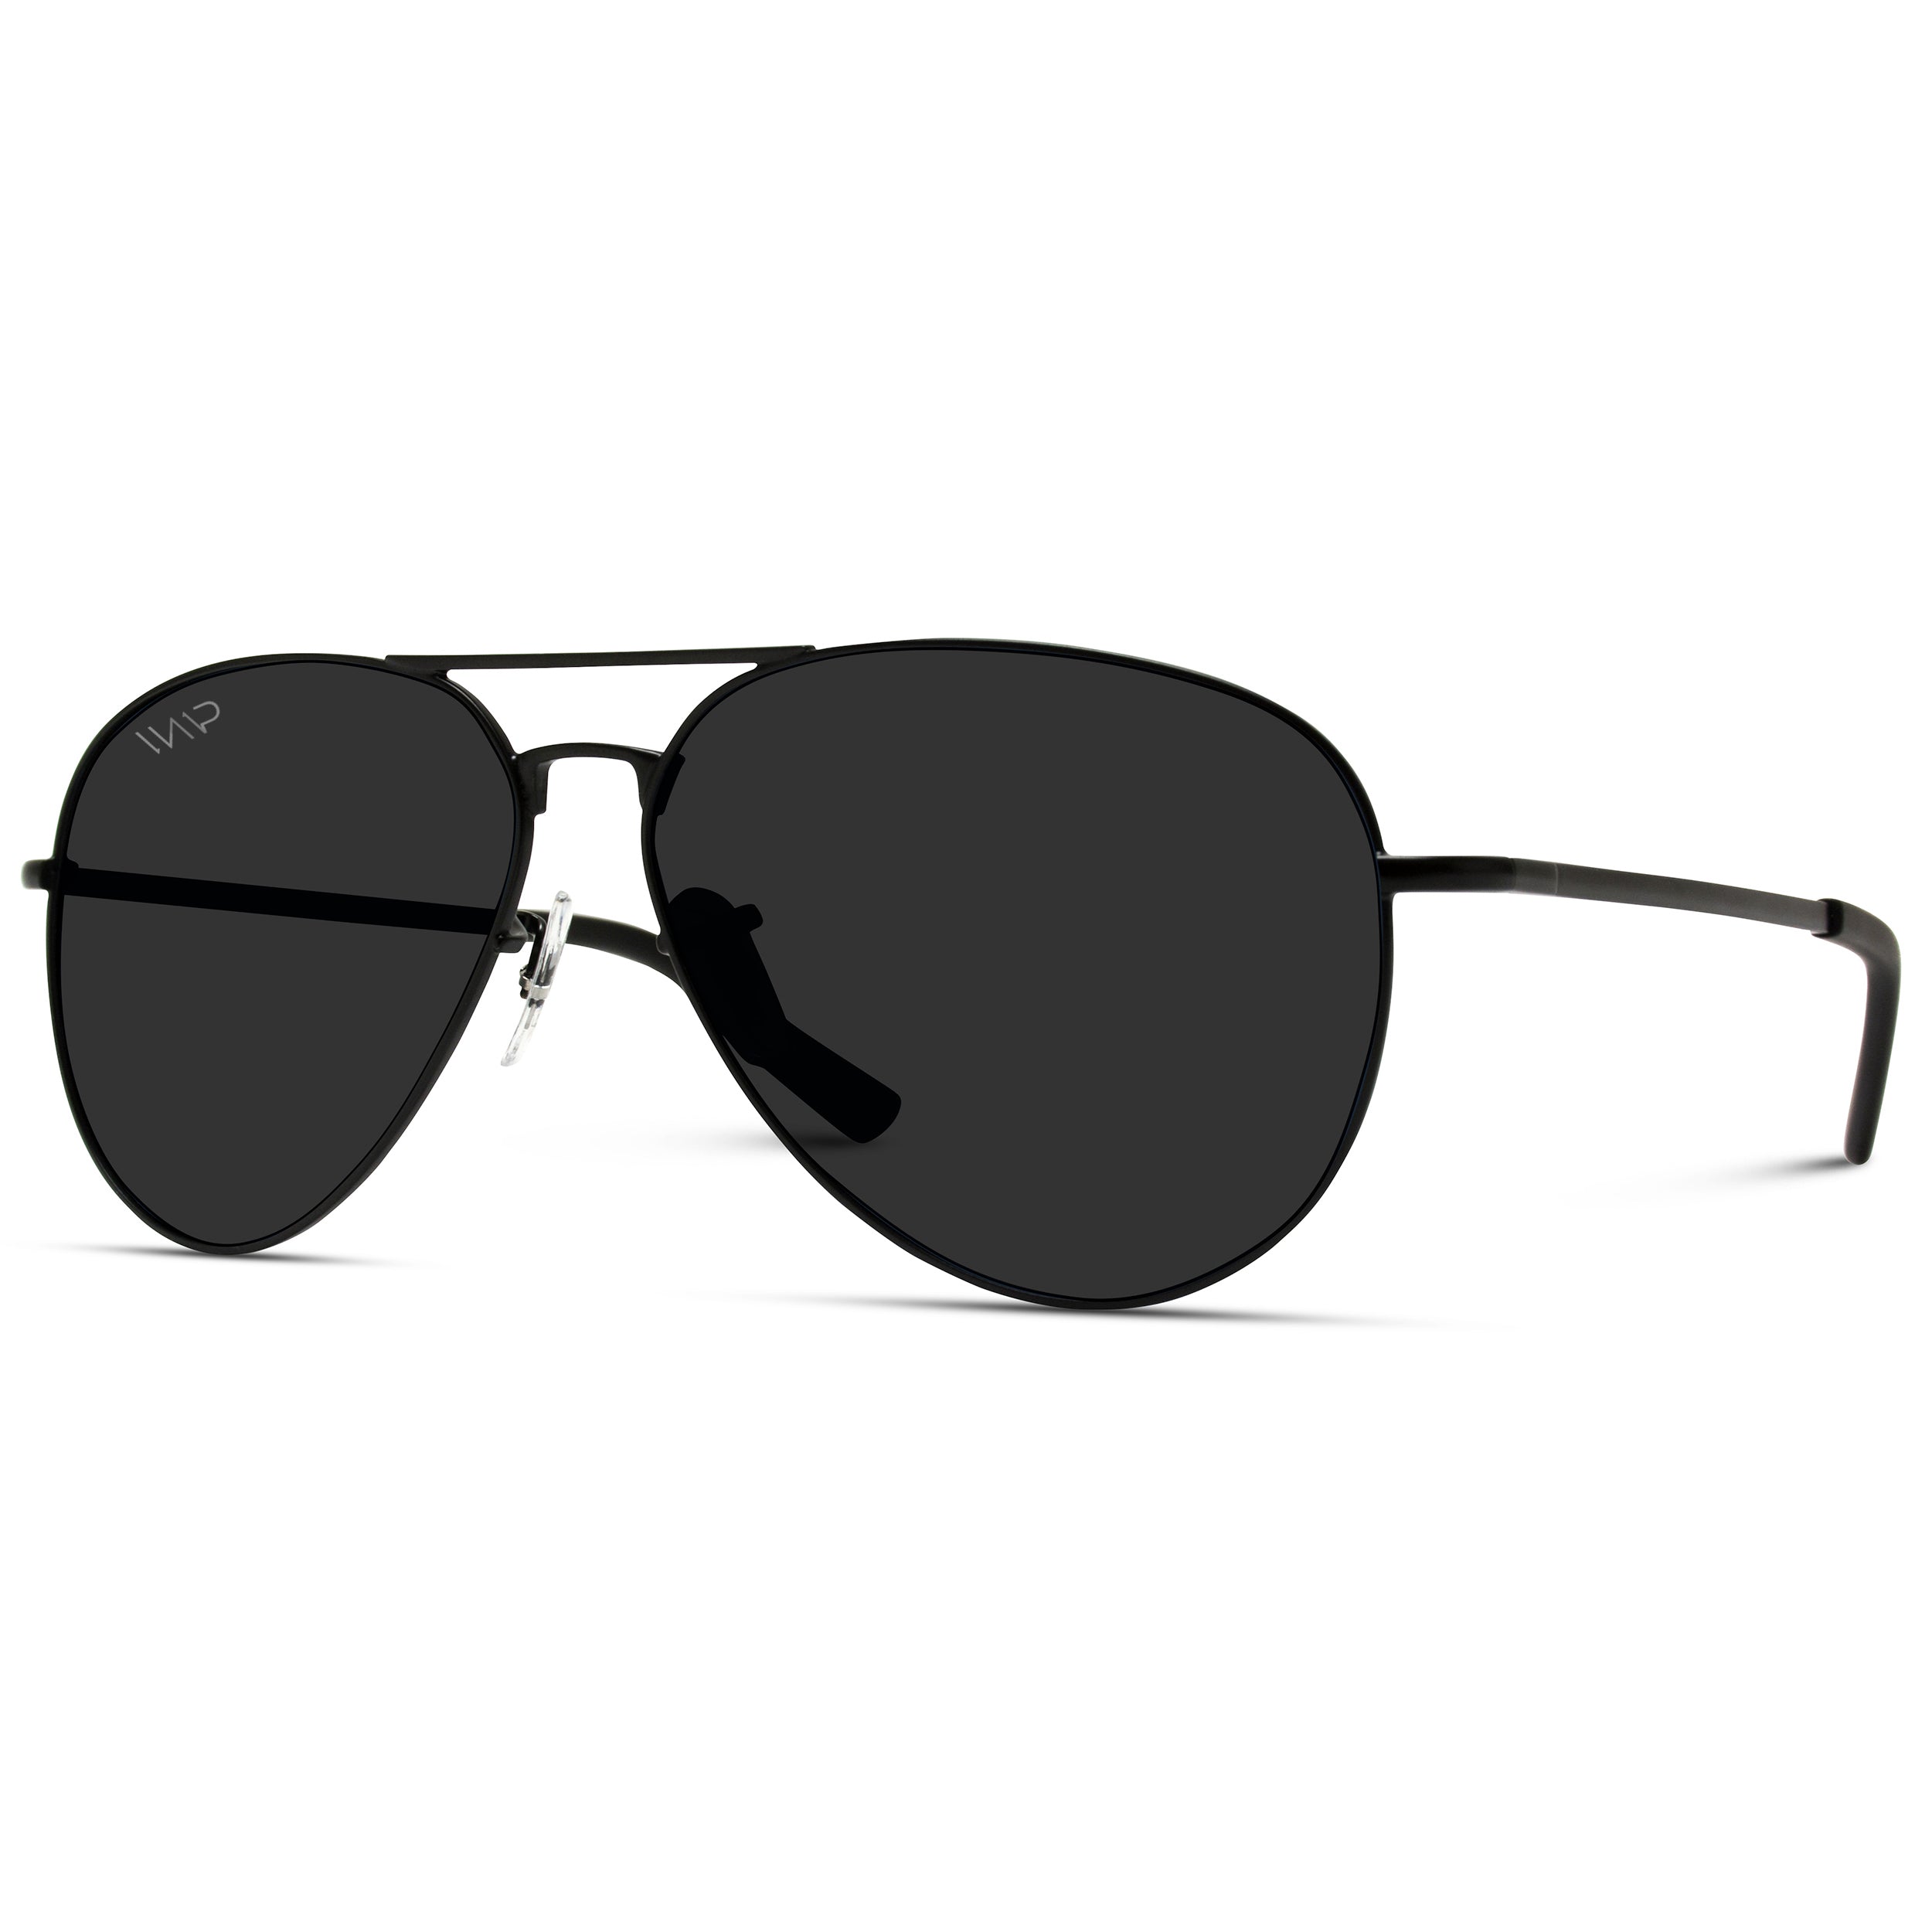 WearMe Pro - Classic Full Black Polarized Lens Metal Frame Men Aviator Style Sunglasses - image 4 of 6